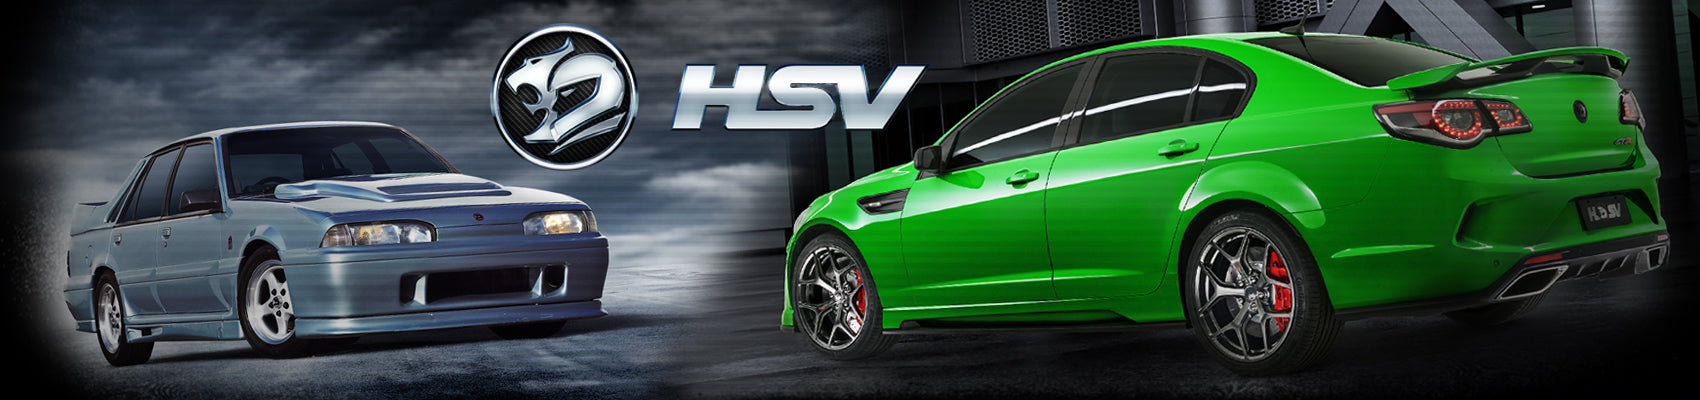 HSV Model Cars